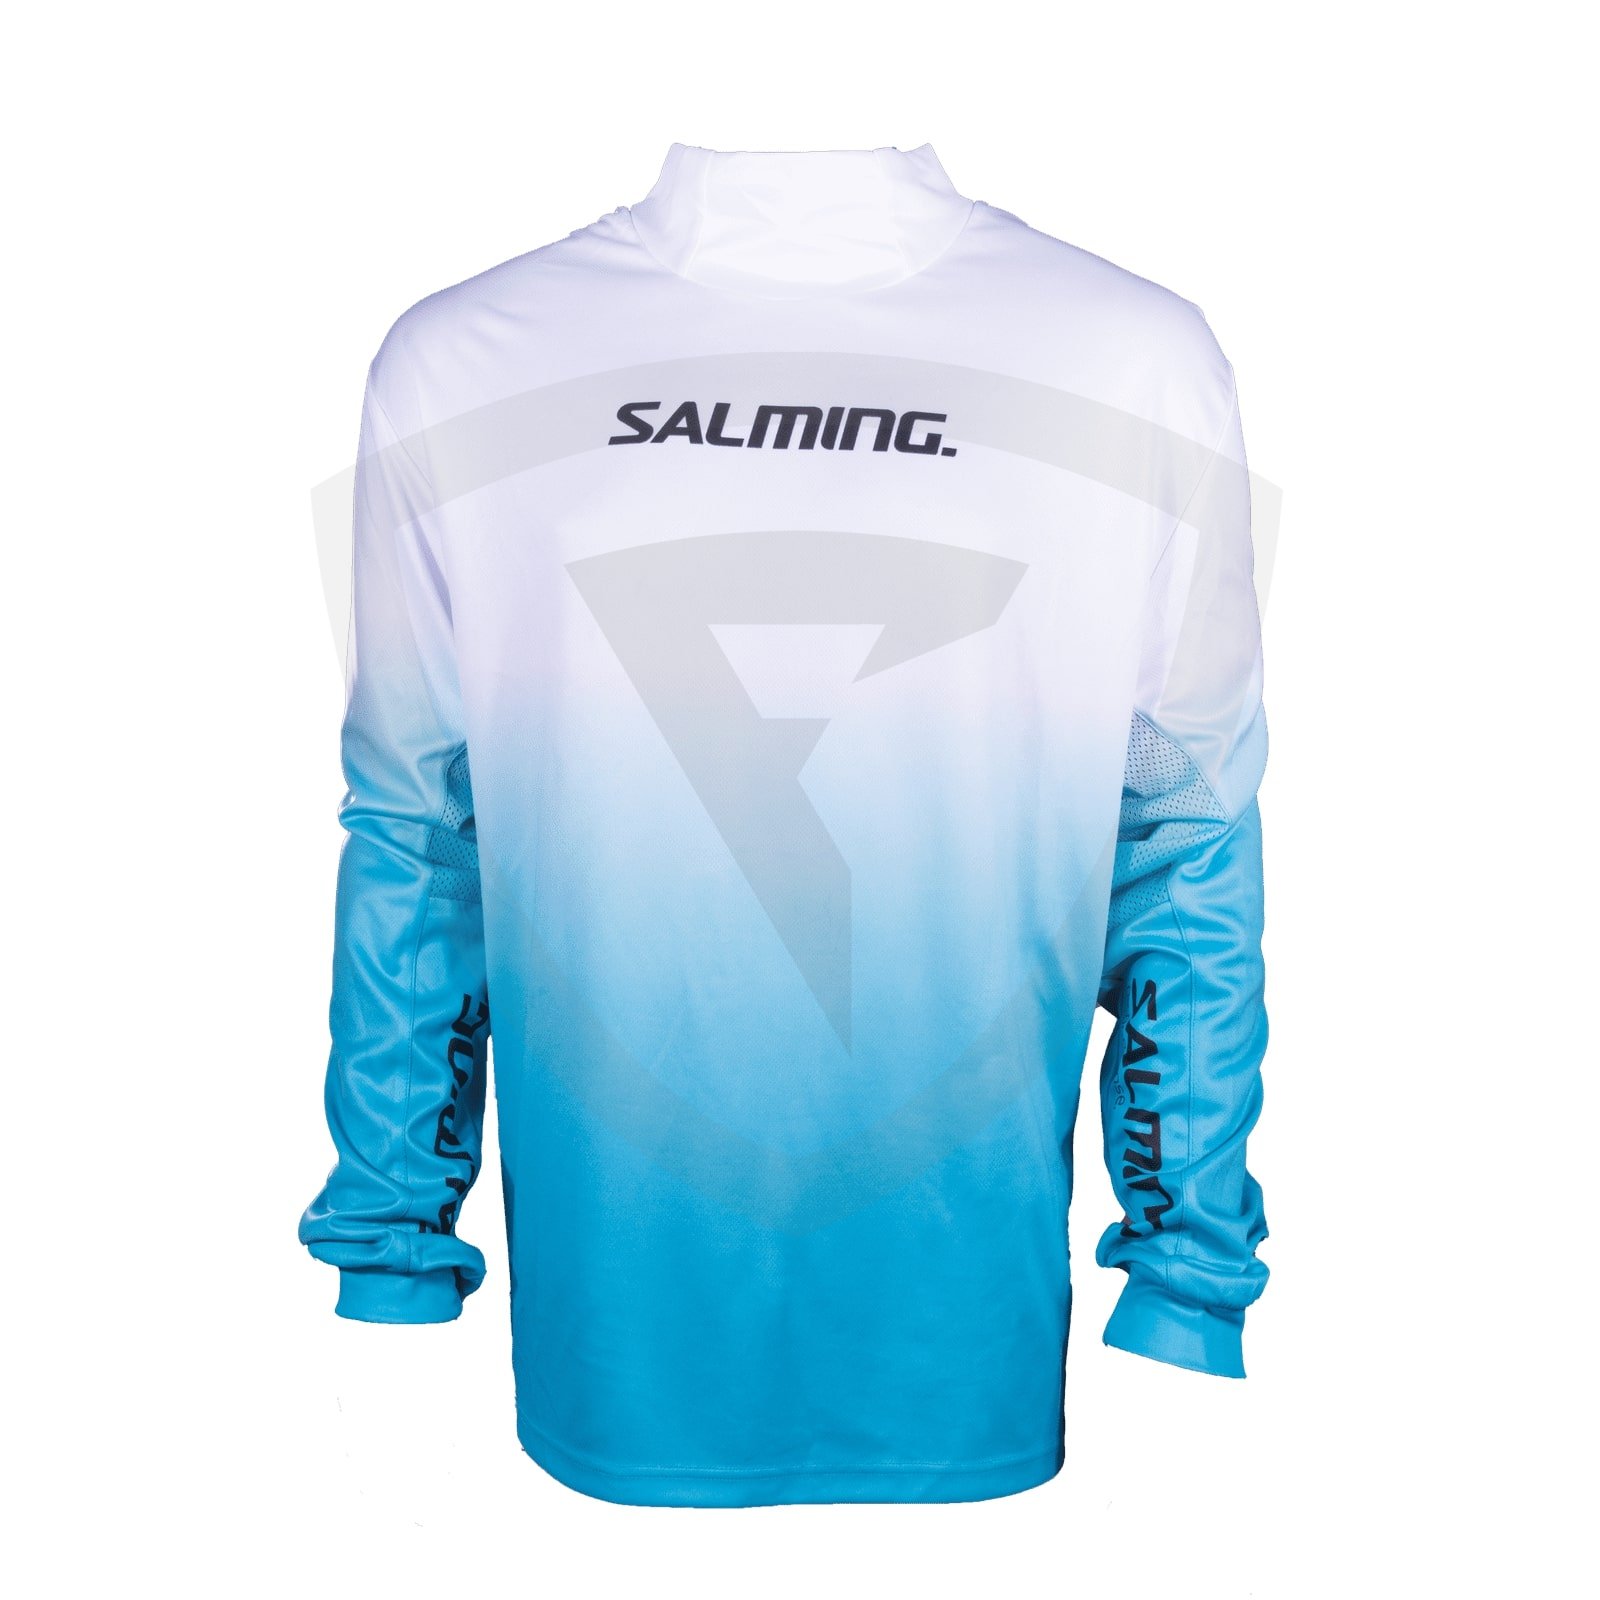 Salming Goalie Jersey SR Blue-White XL modrá-bílá